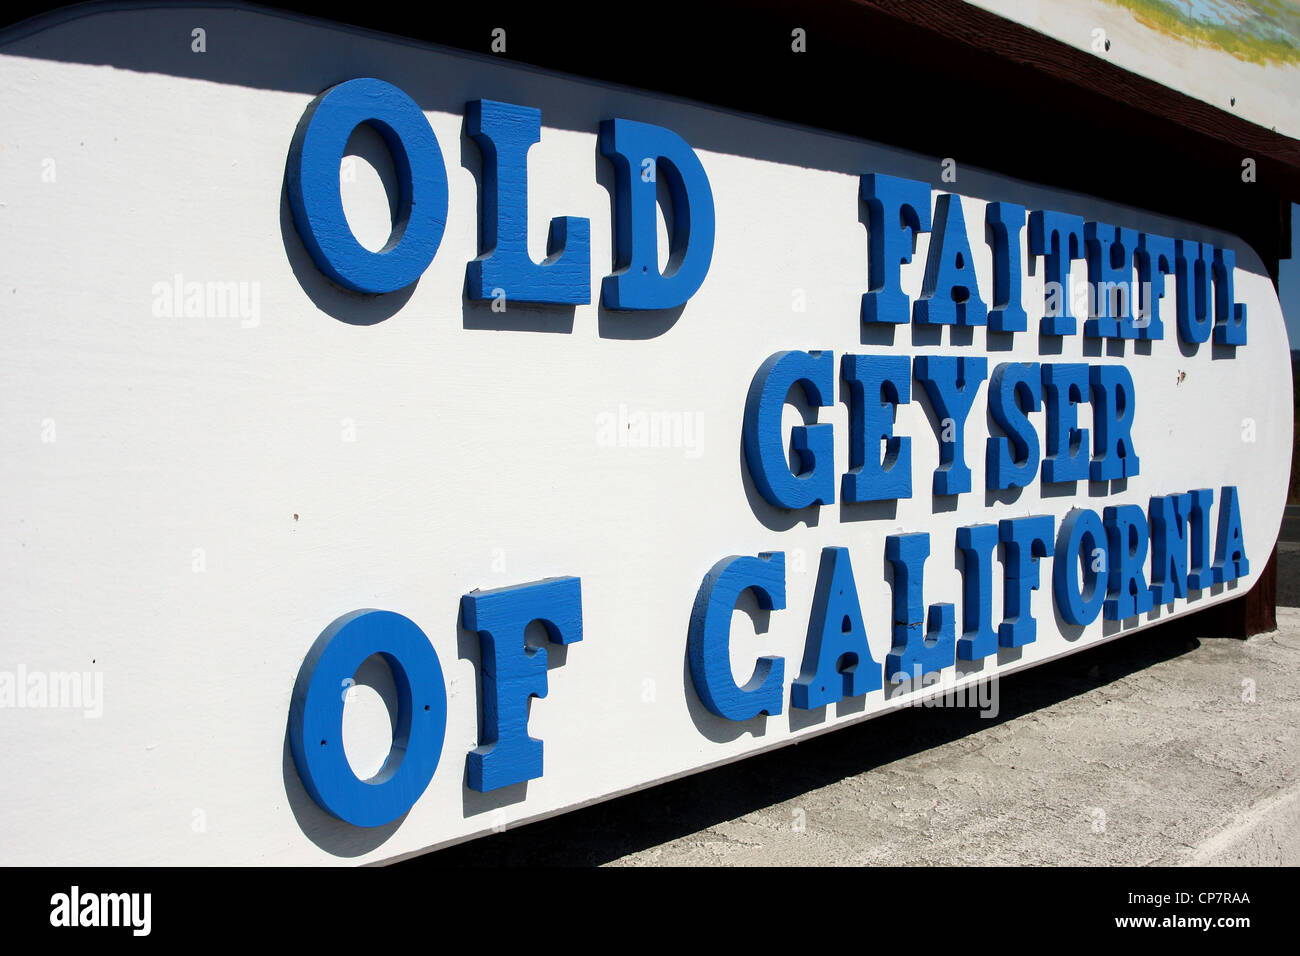 OLD Faithful Geyser DE CALIFORNIE CALISTOGA CALIFORNIA USA 06 Octobre 2011 Banque D'Images